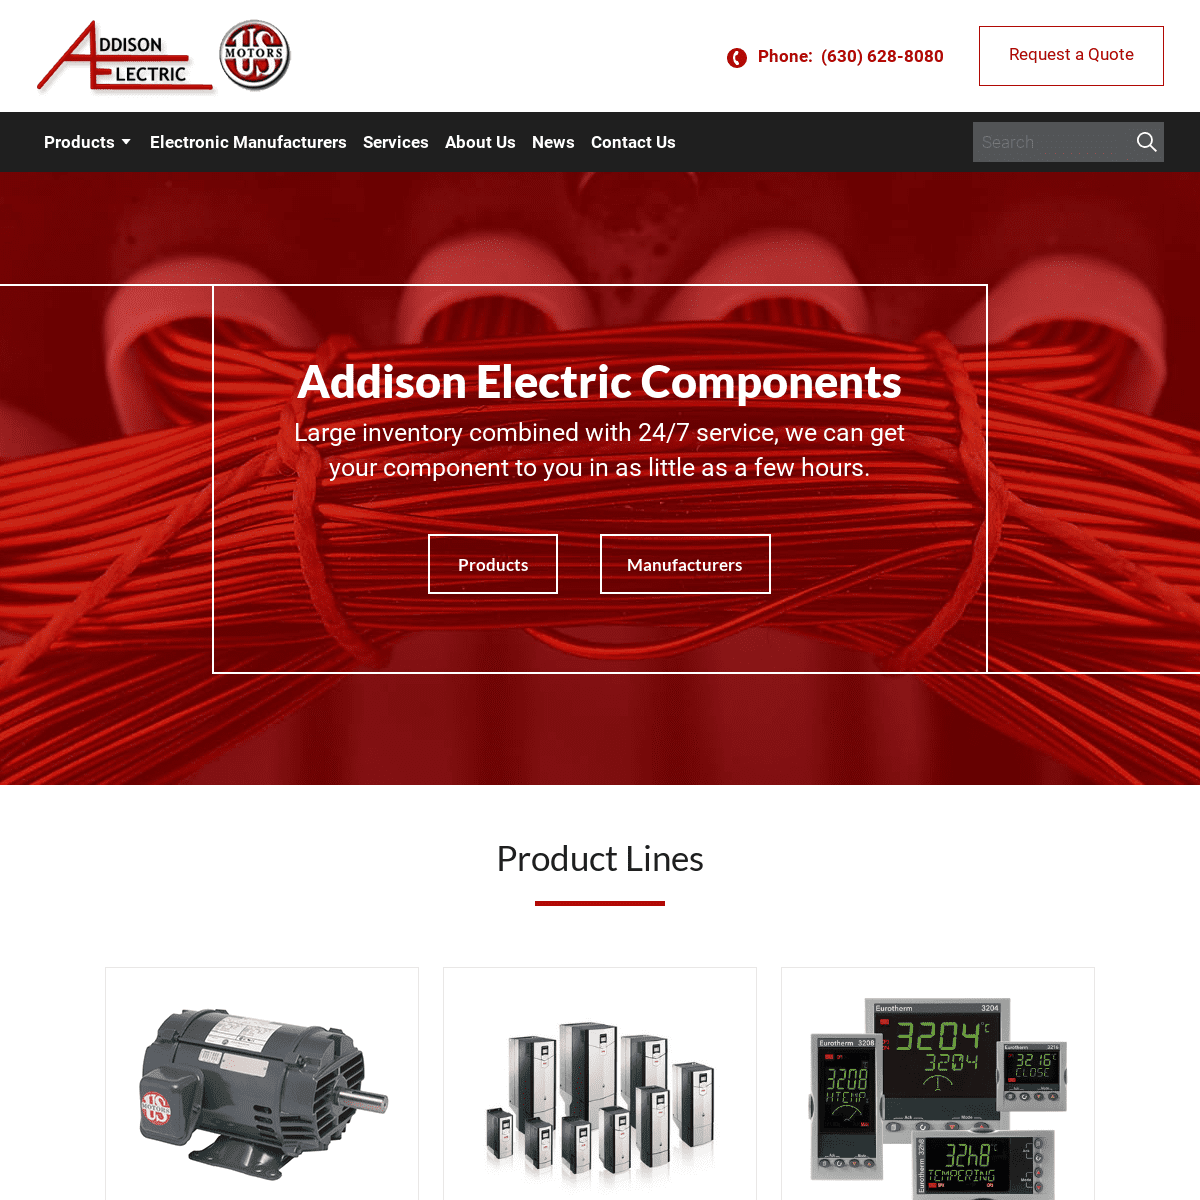 A complete backup of addisonelectric.com